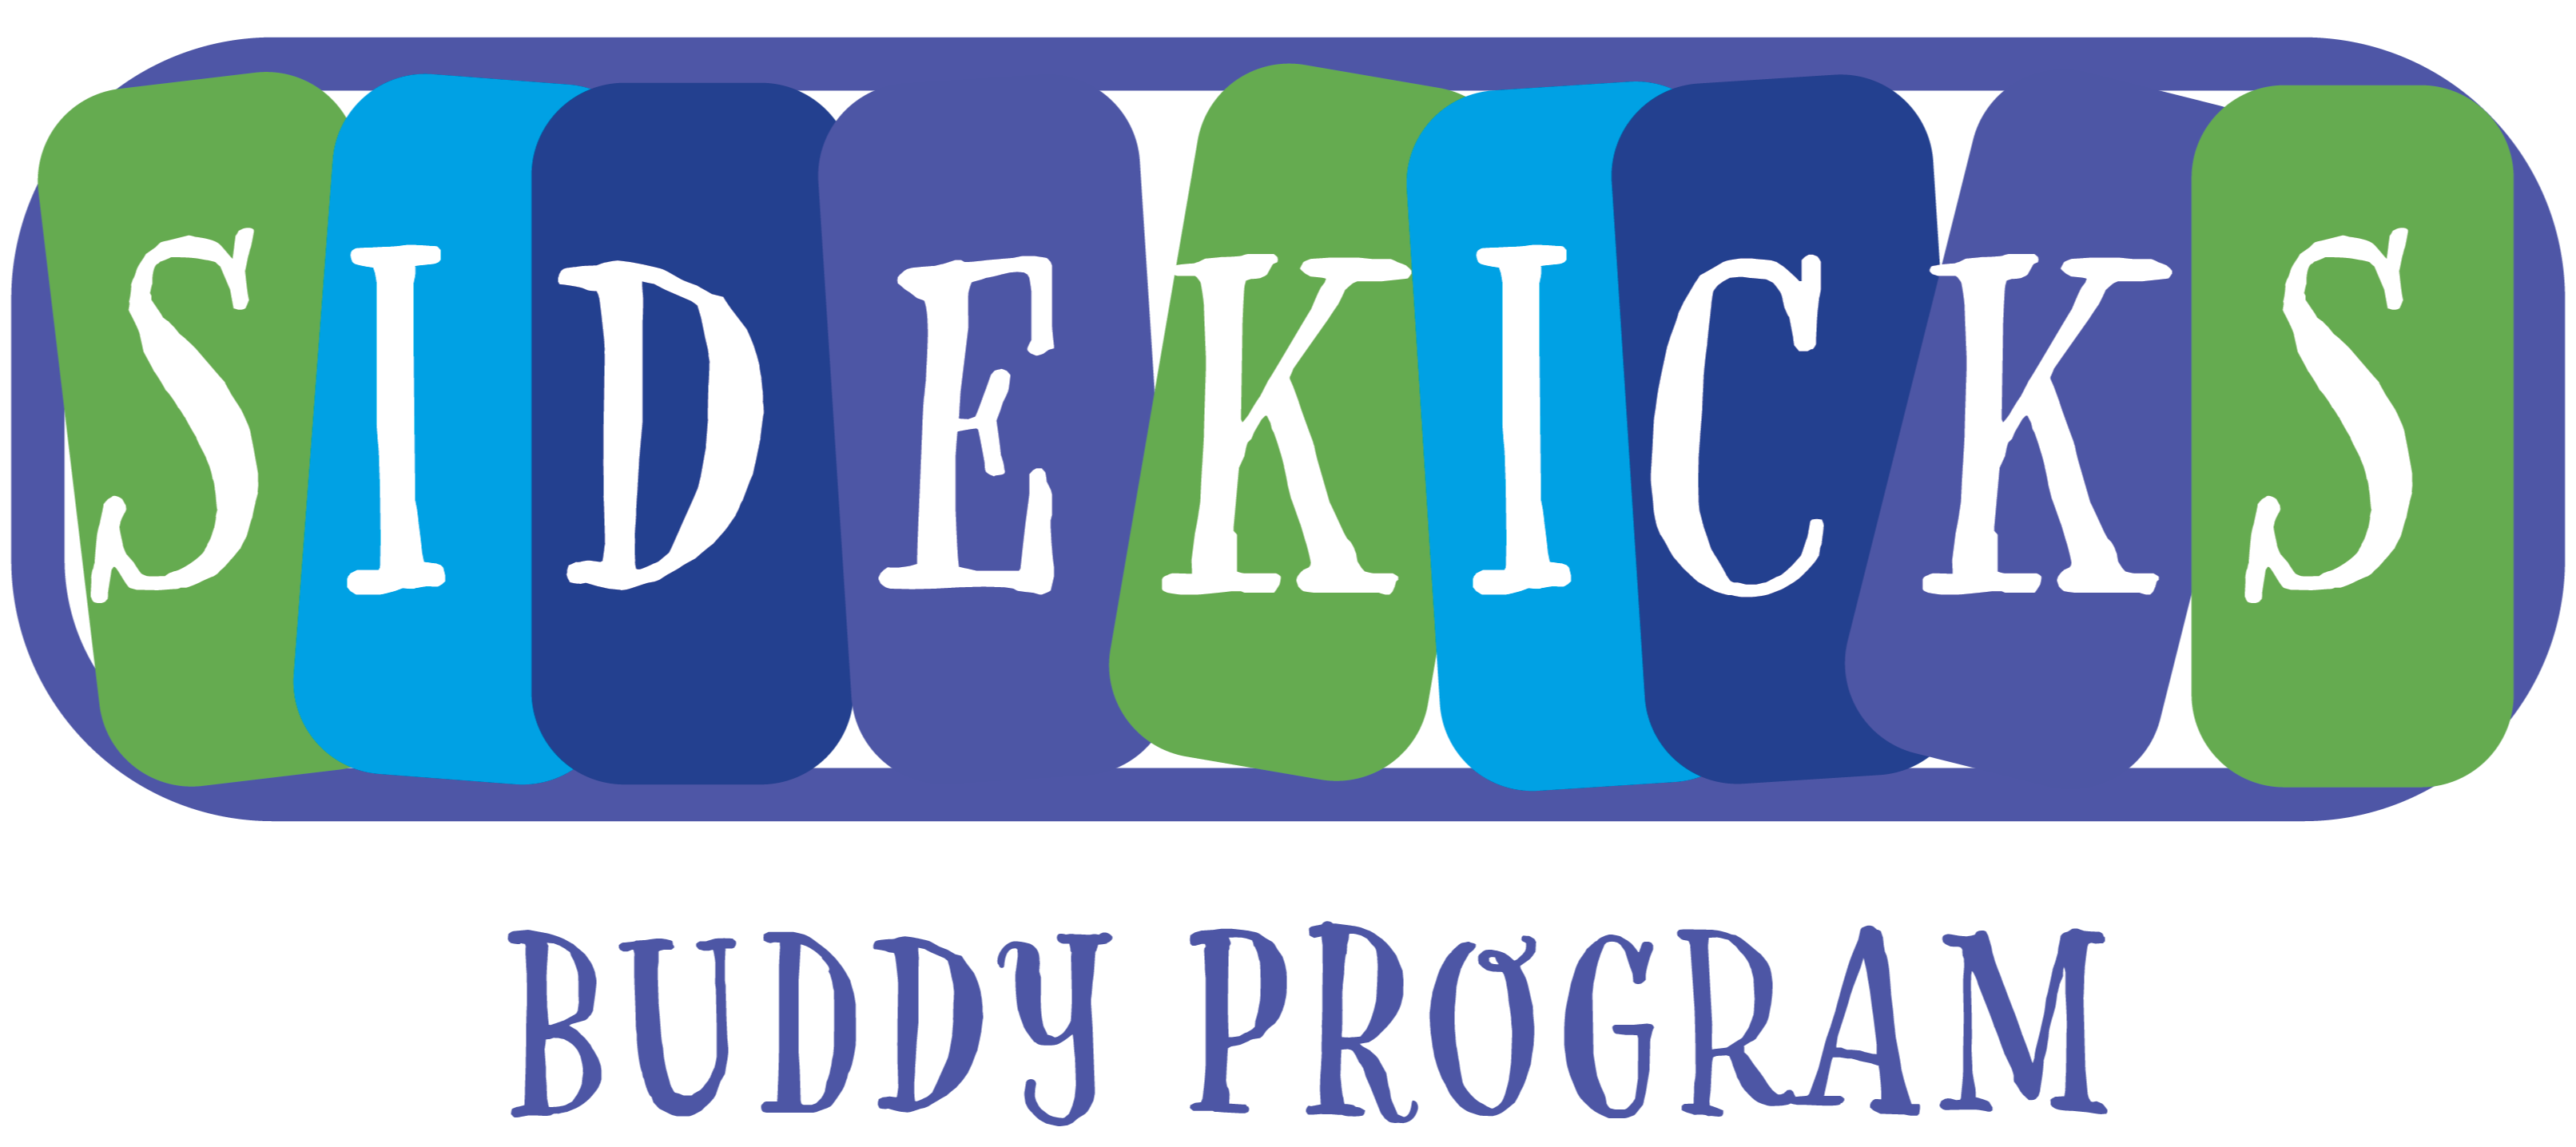 Sidekick Buddy Program logo